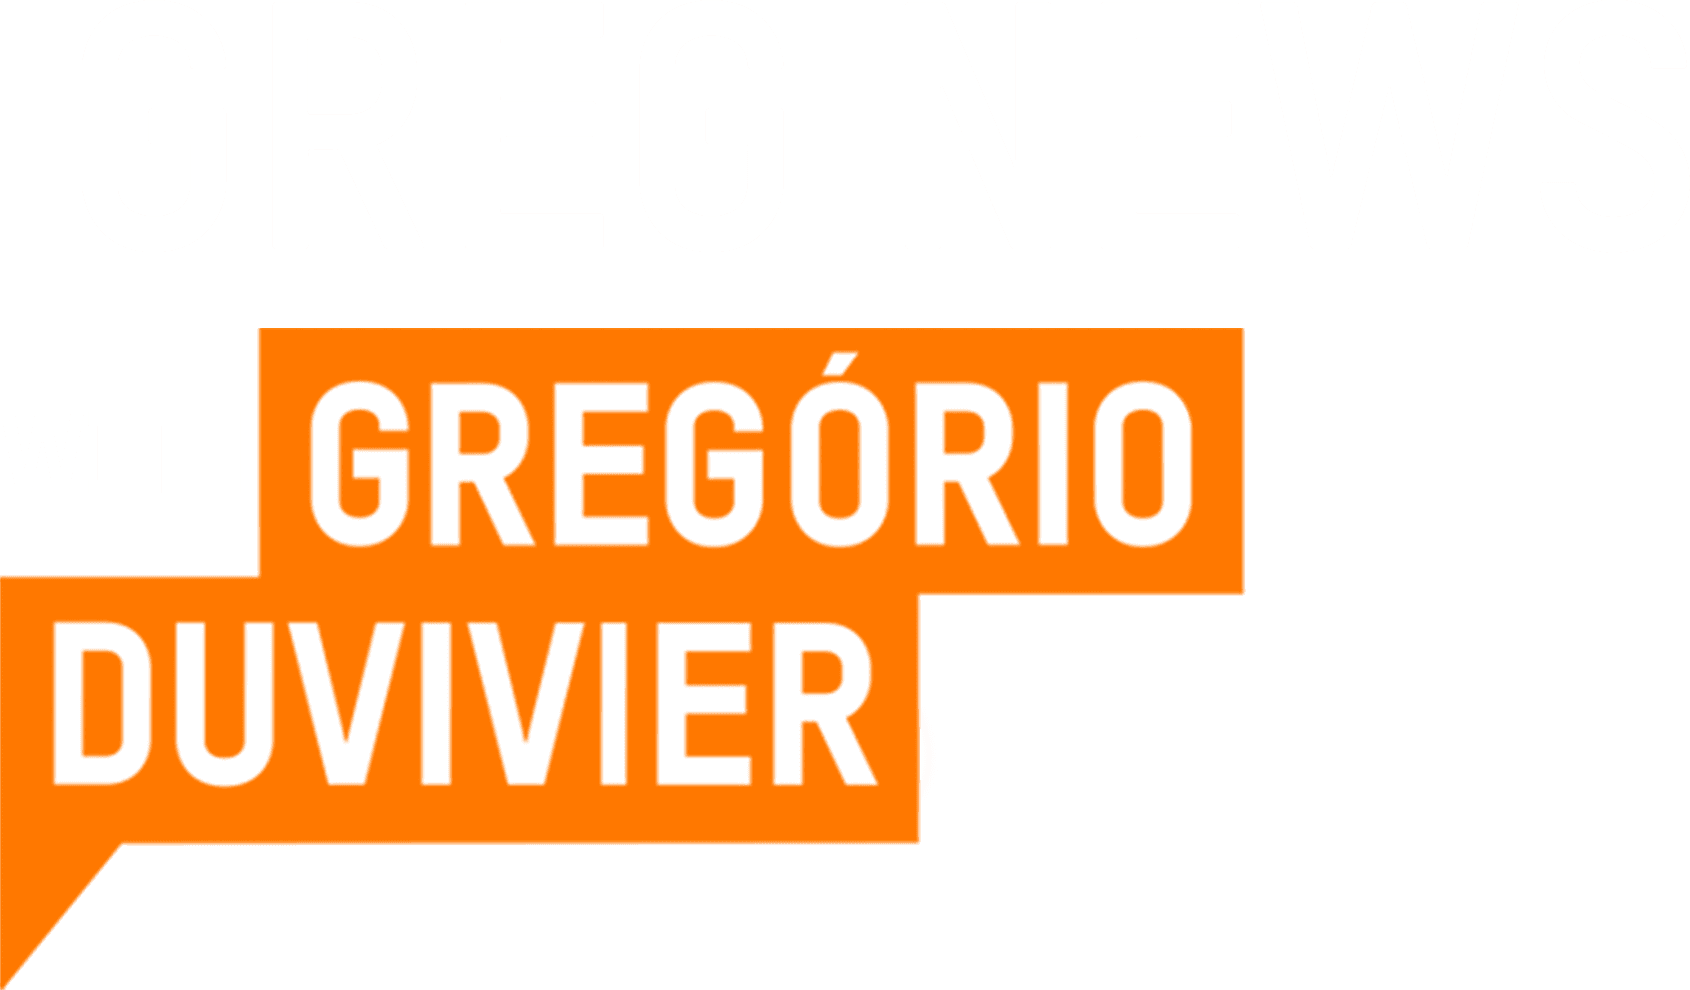 Greg News logo